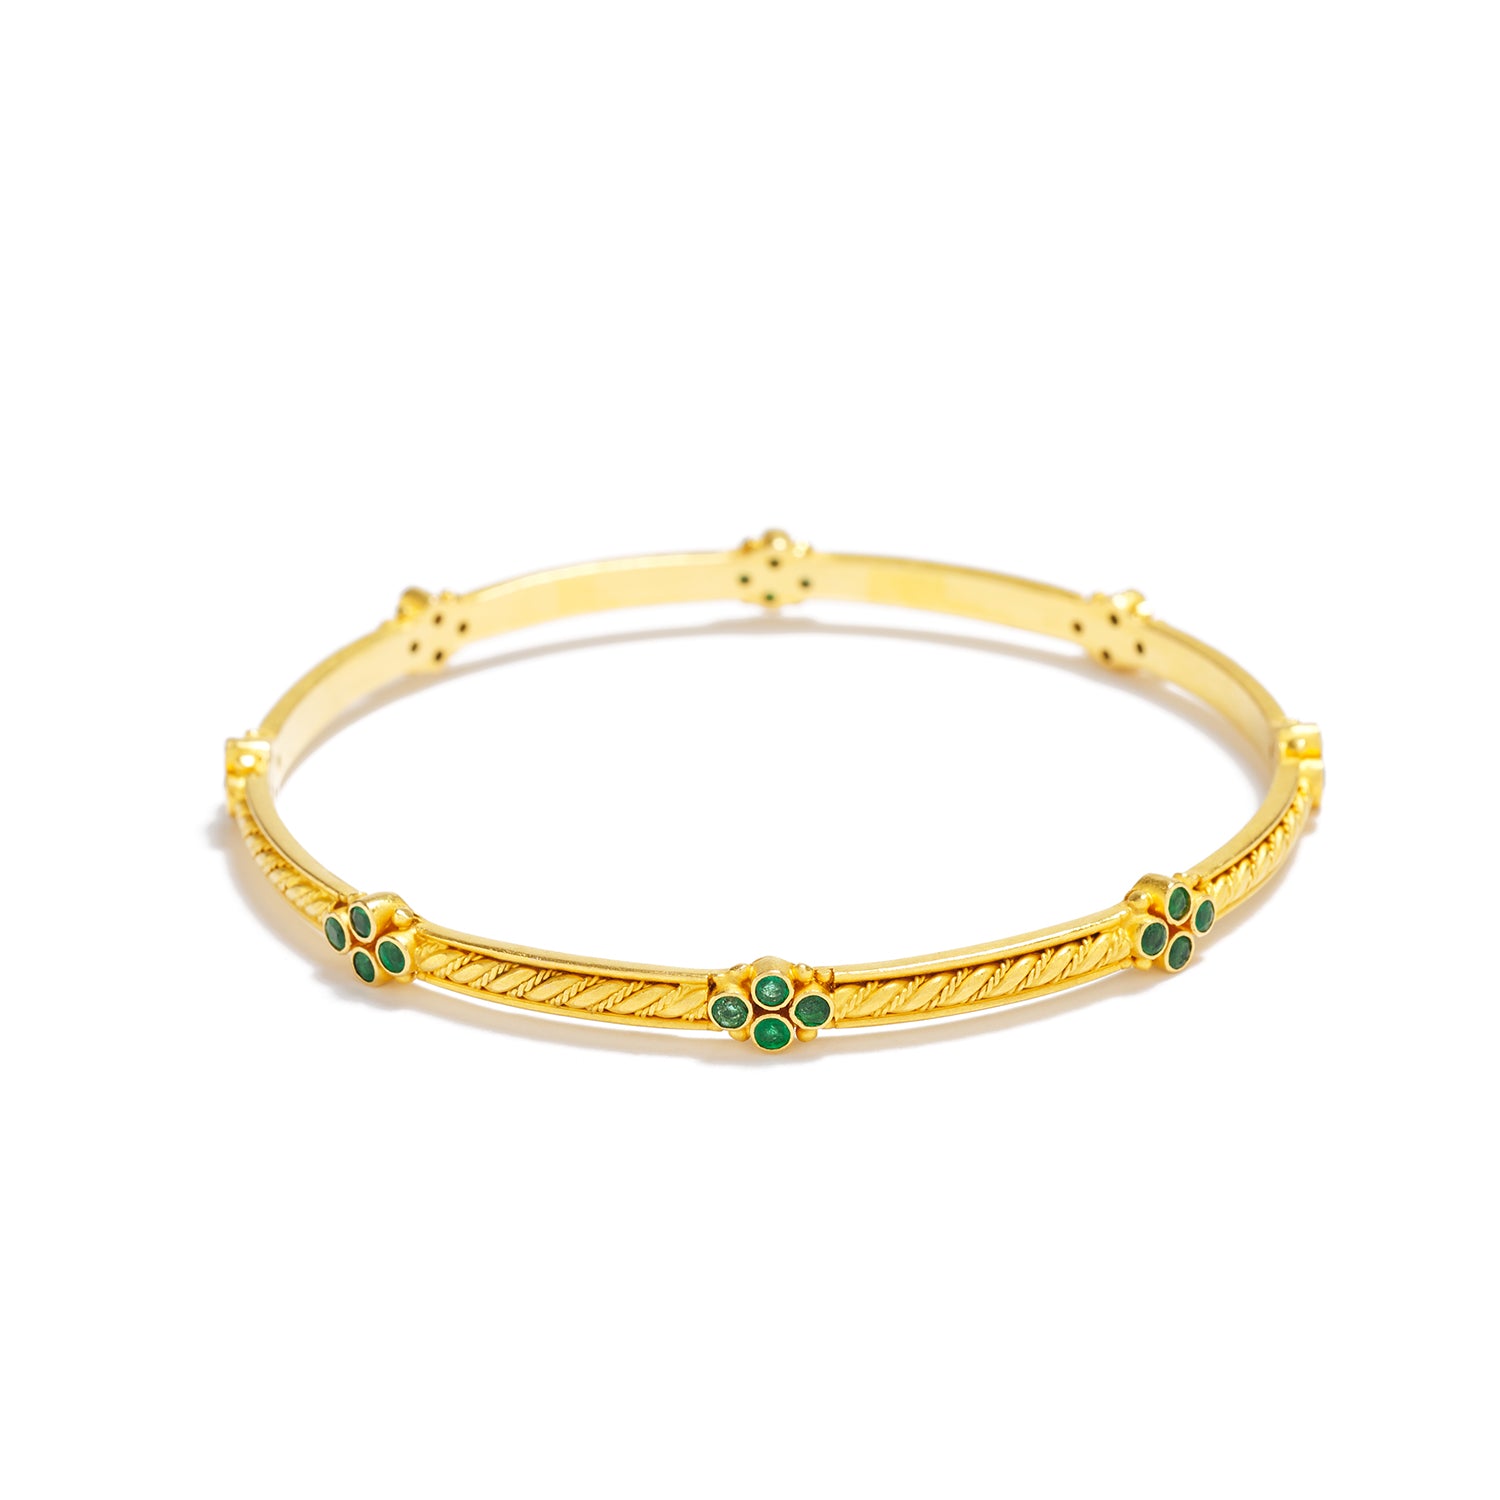 Latest lightweight gold bracelets designs - YouTube